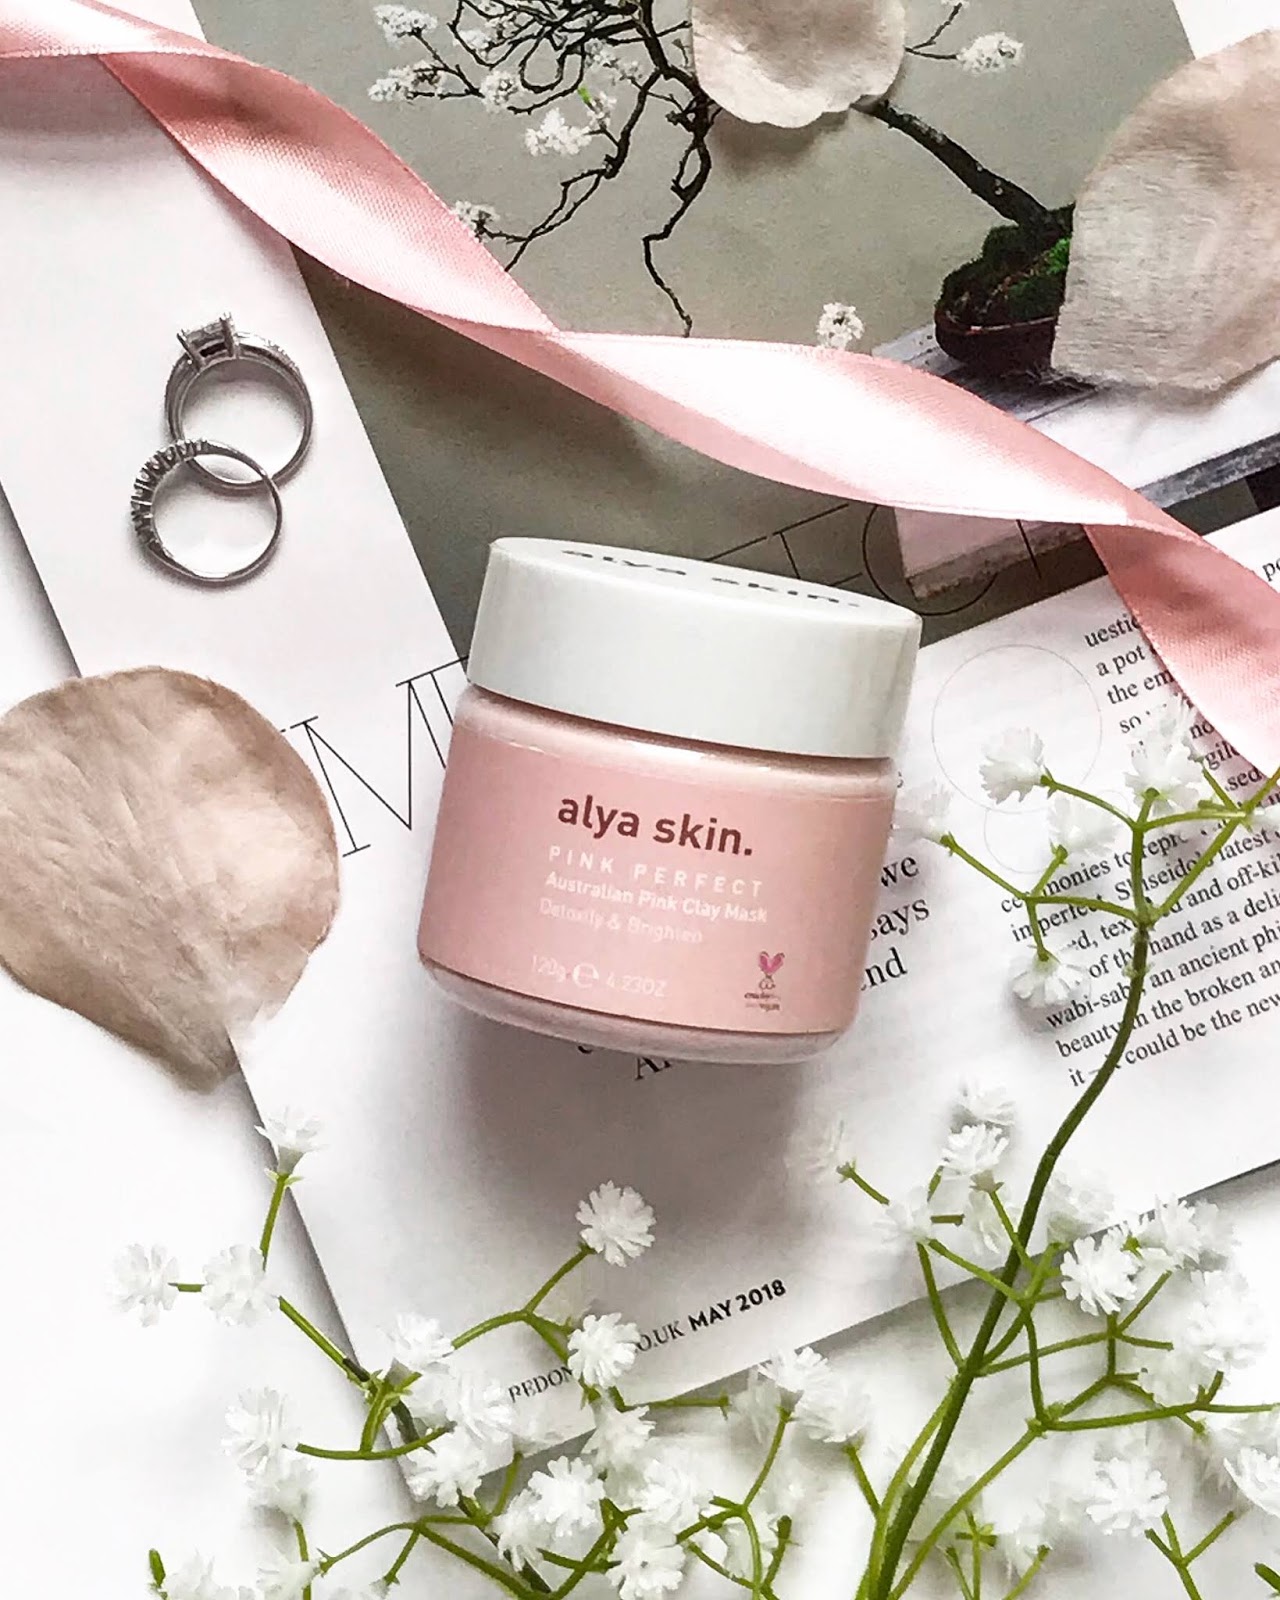 alya skin pink perfect clay mask review blog post